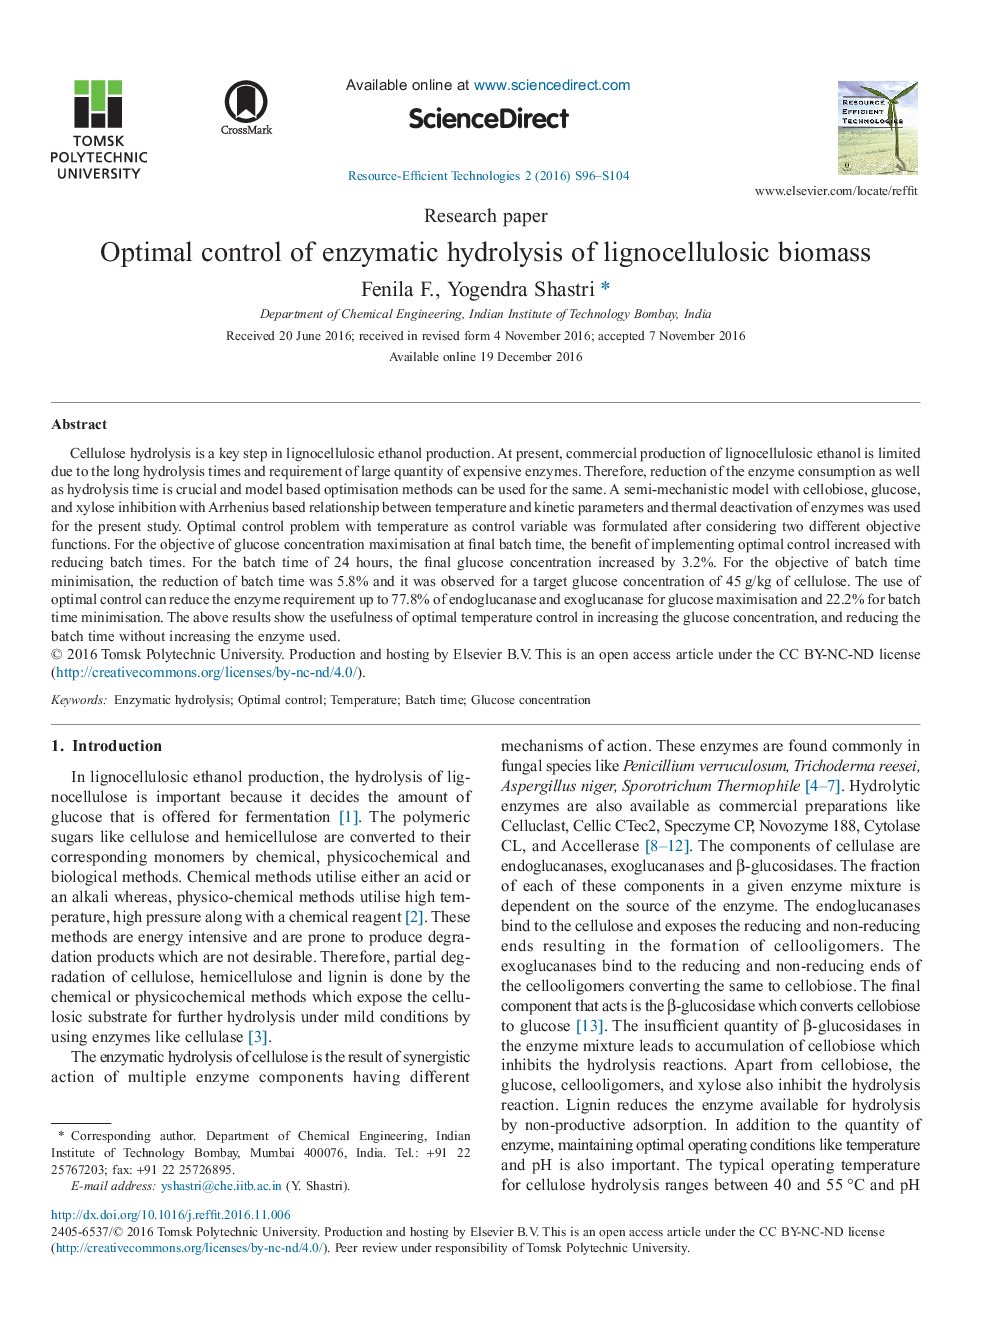 Optimal control of enzymatic hydrolysis of lignocellulosic biomass